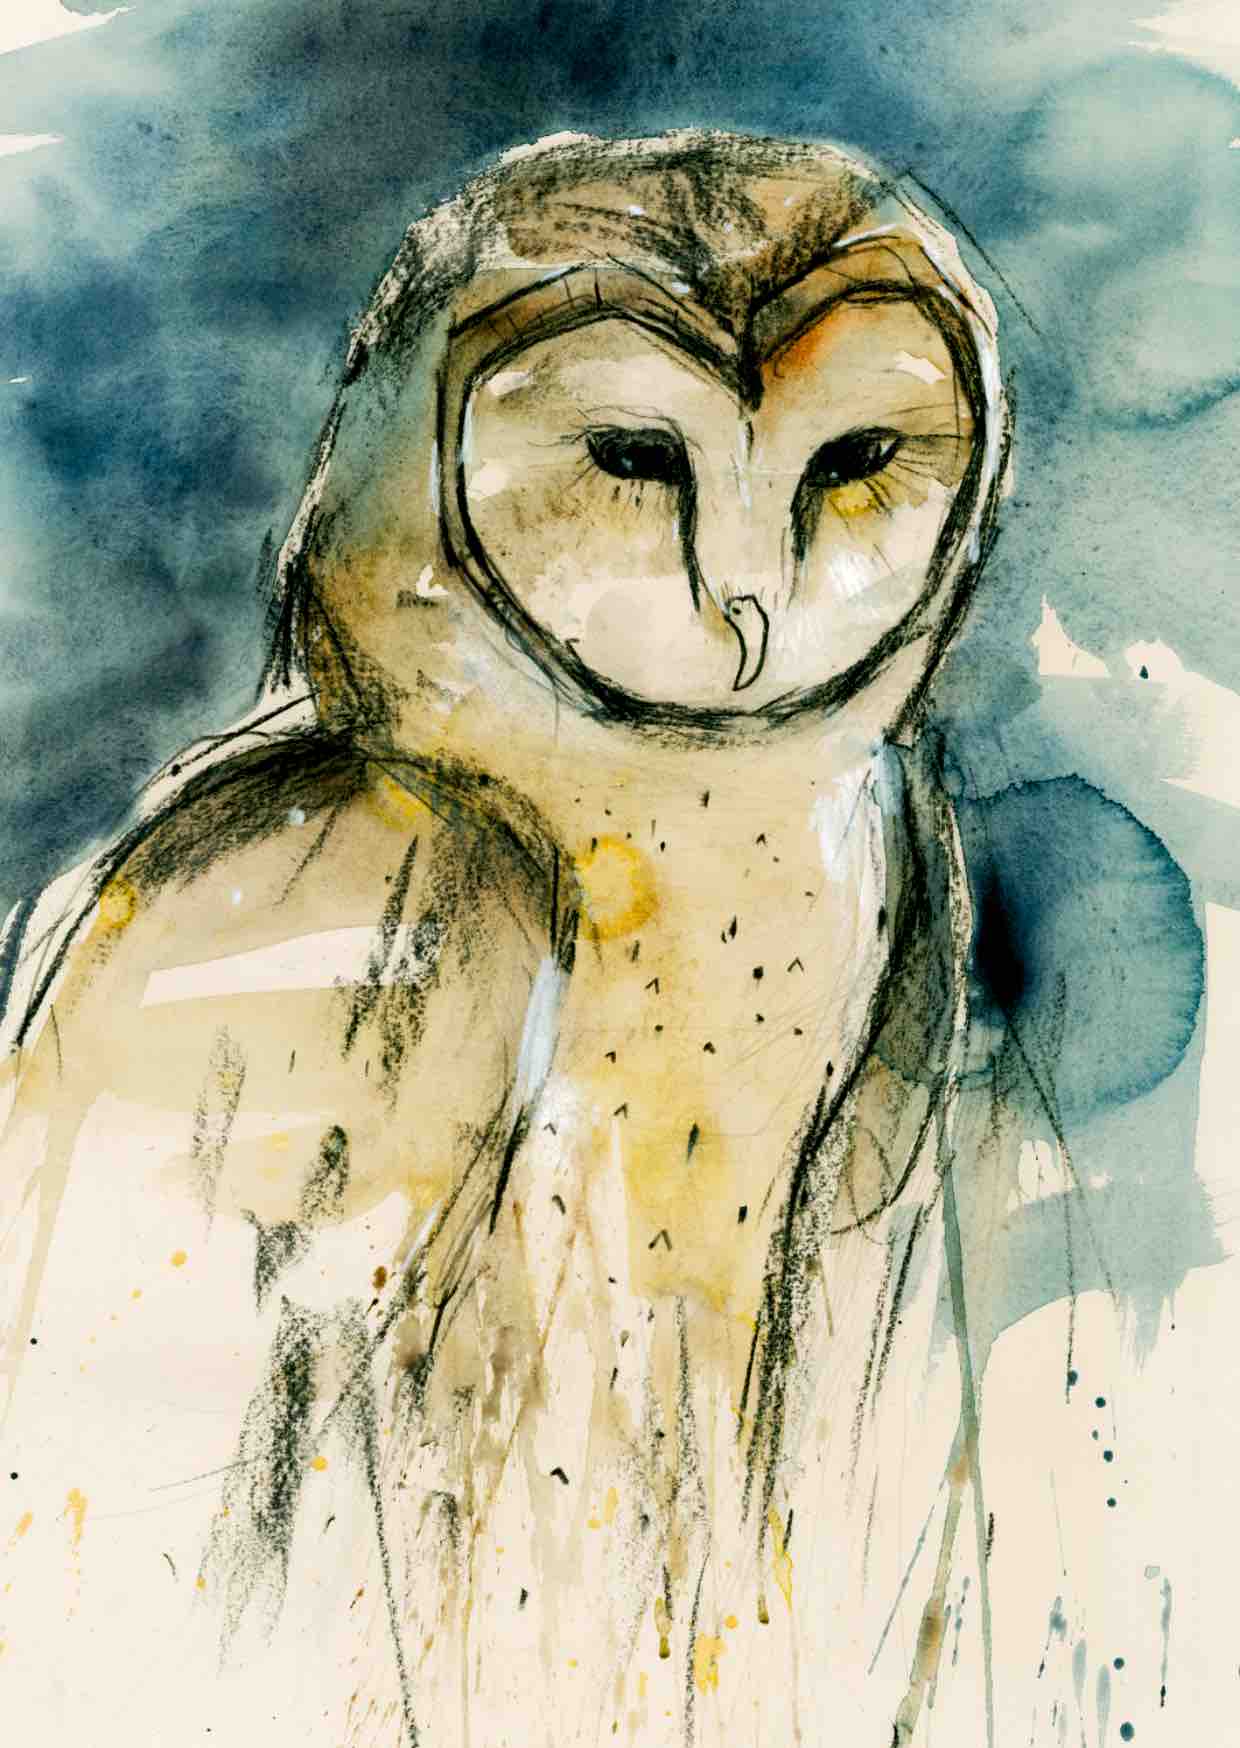 Barn Owl Print